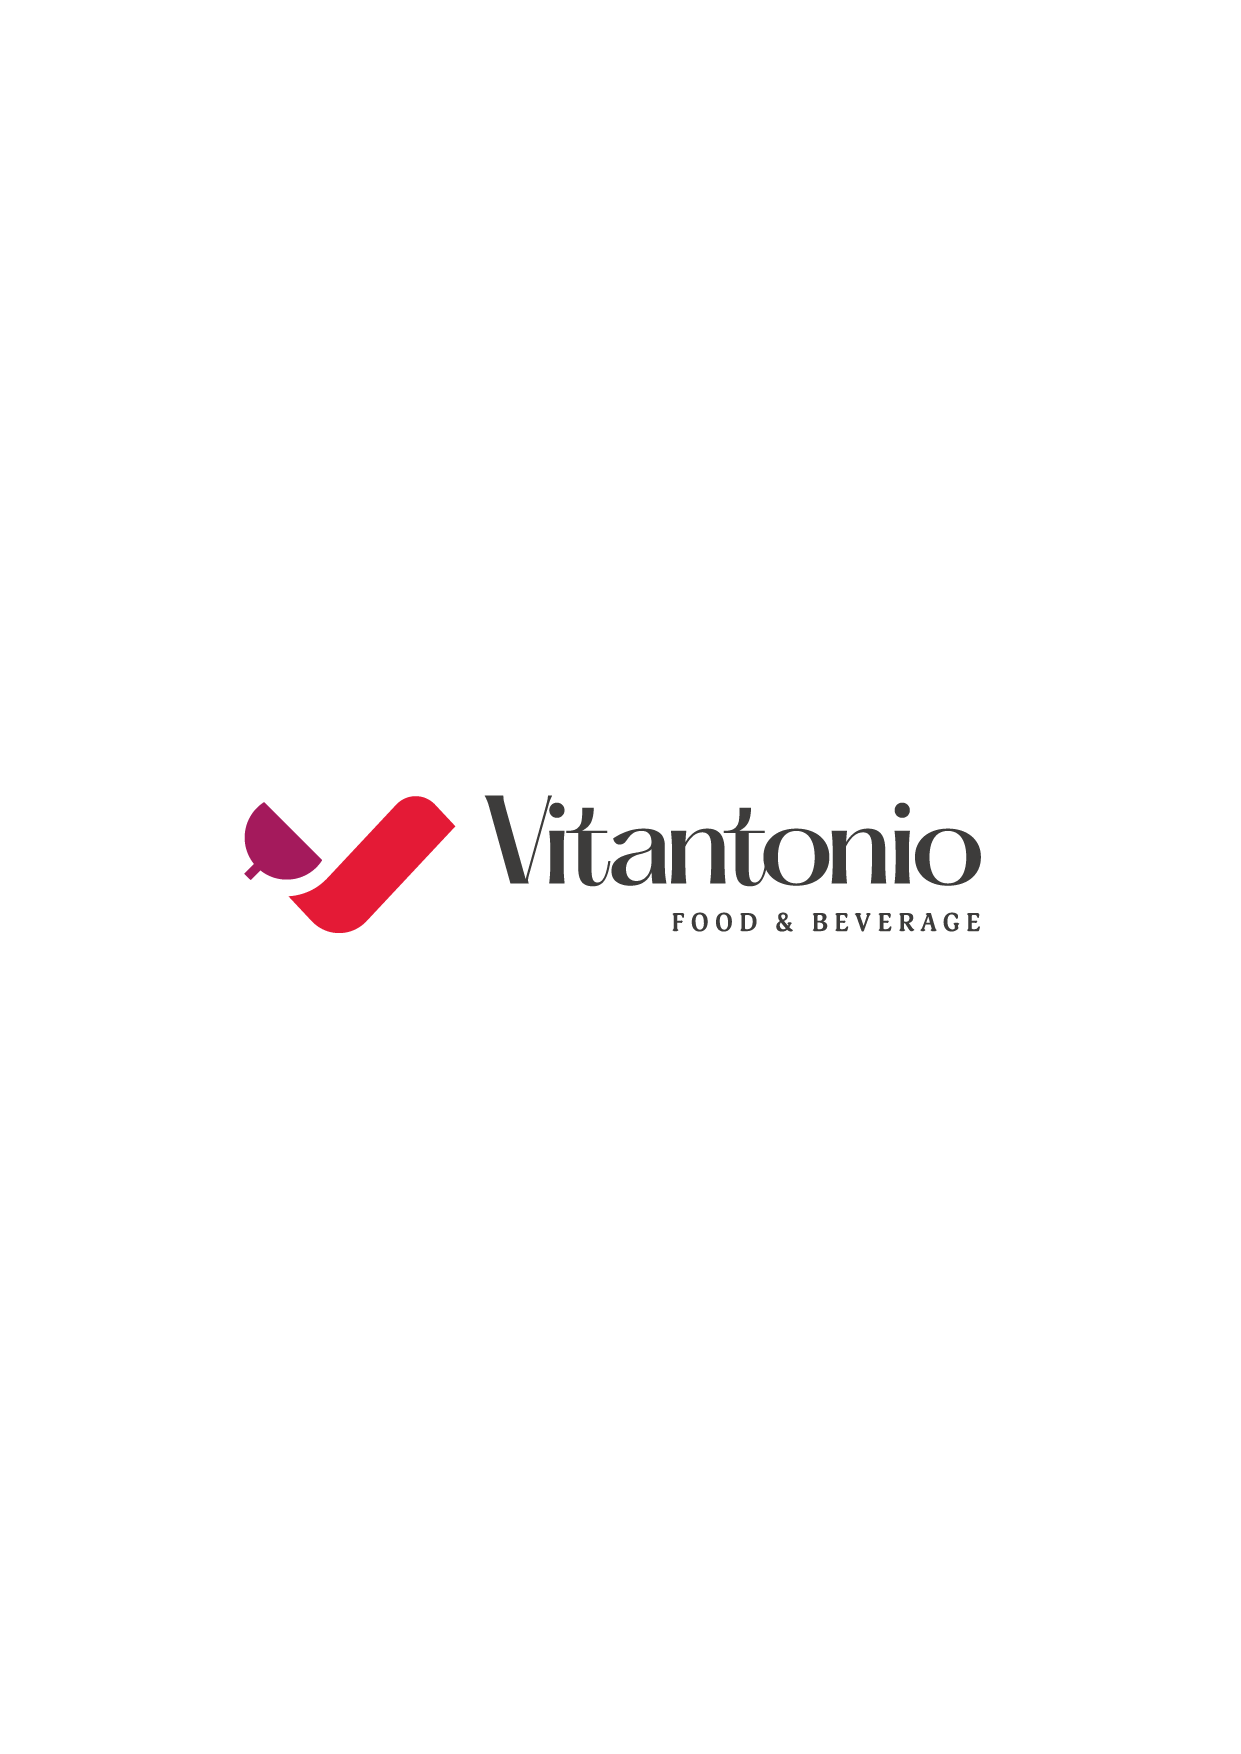 versioni logo Vitantonio_rgbpng